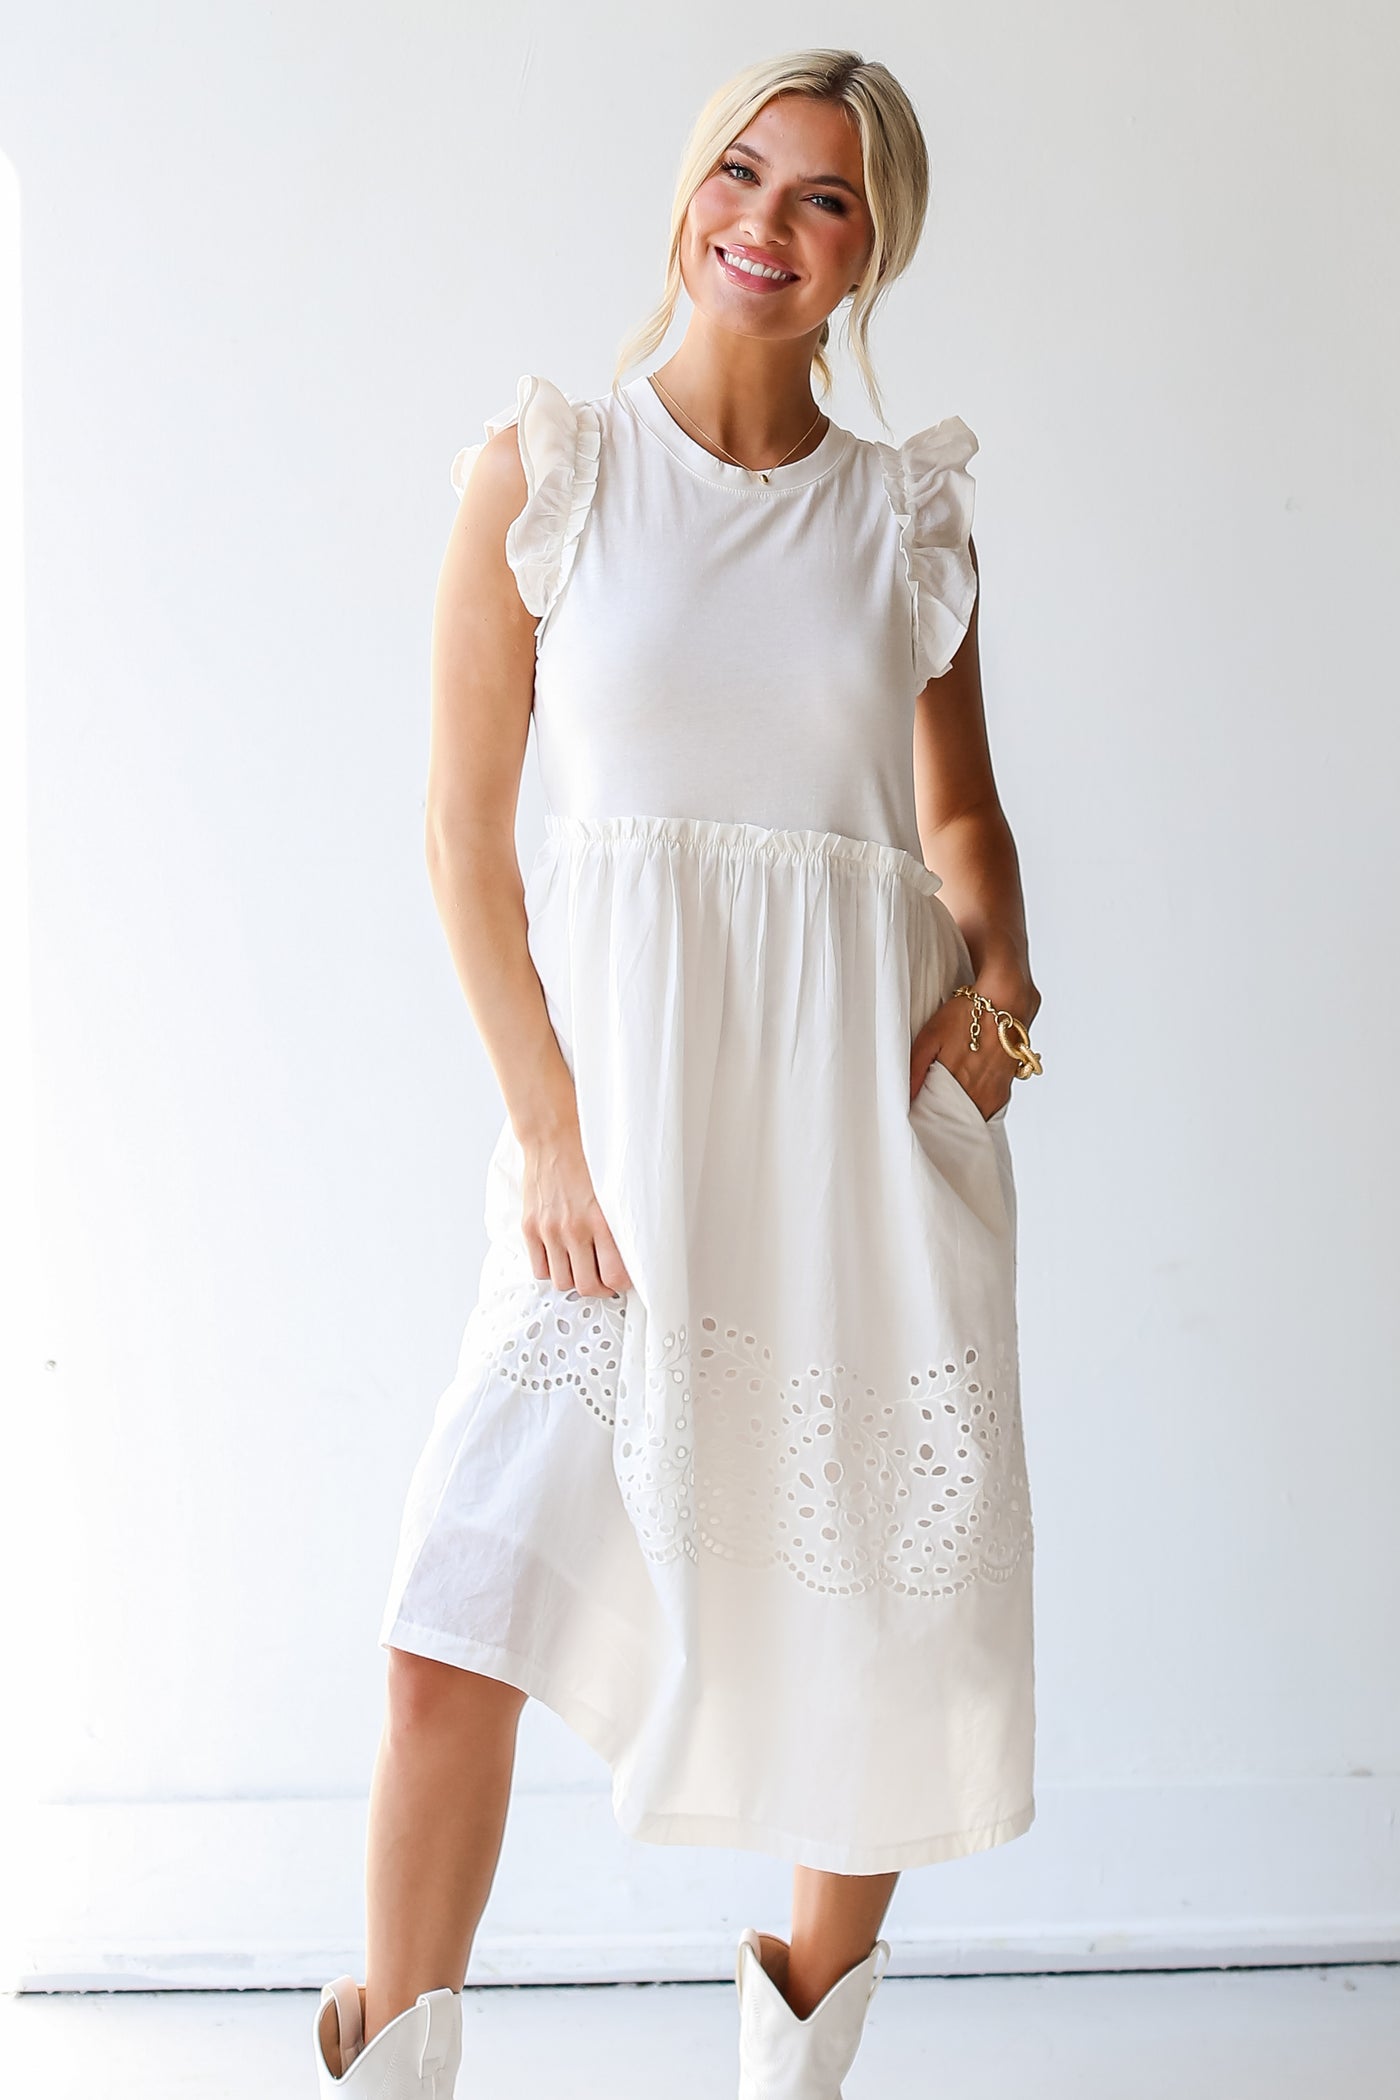 white Eyelet Midi Dress on dress up model